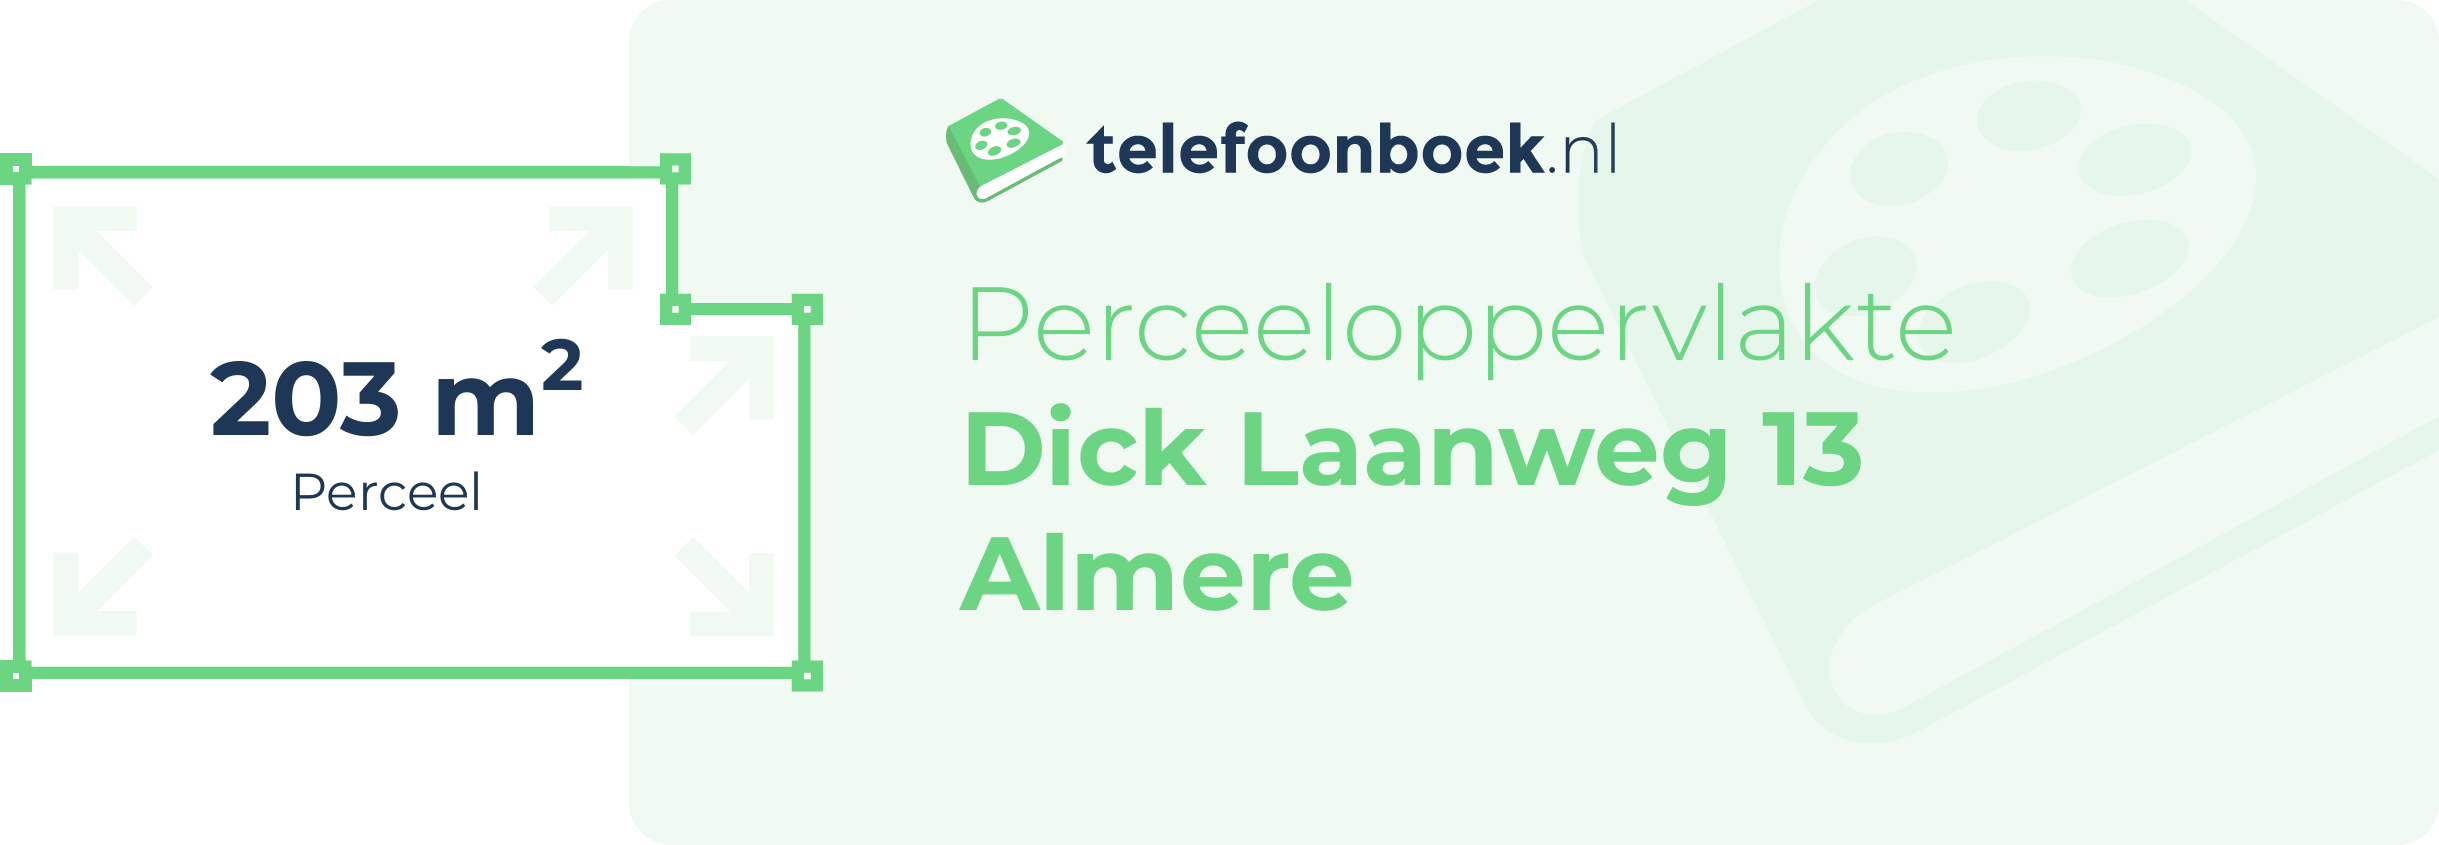 Perceeloppervlakte Dick Laanweg 13 Almere